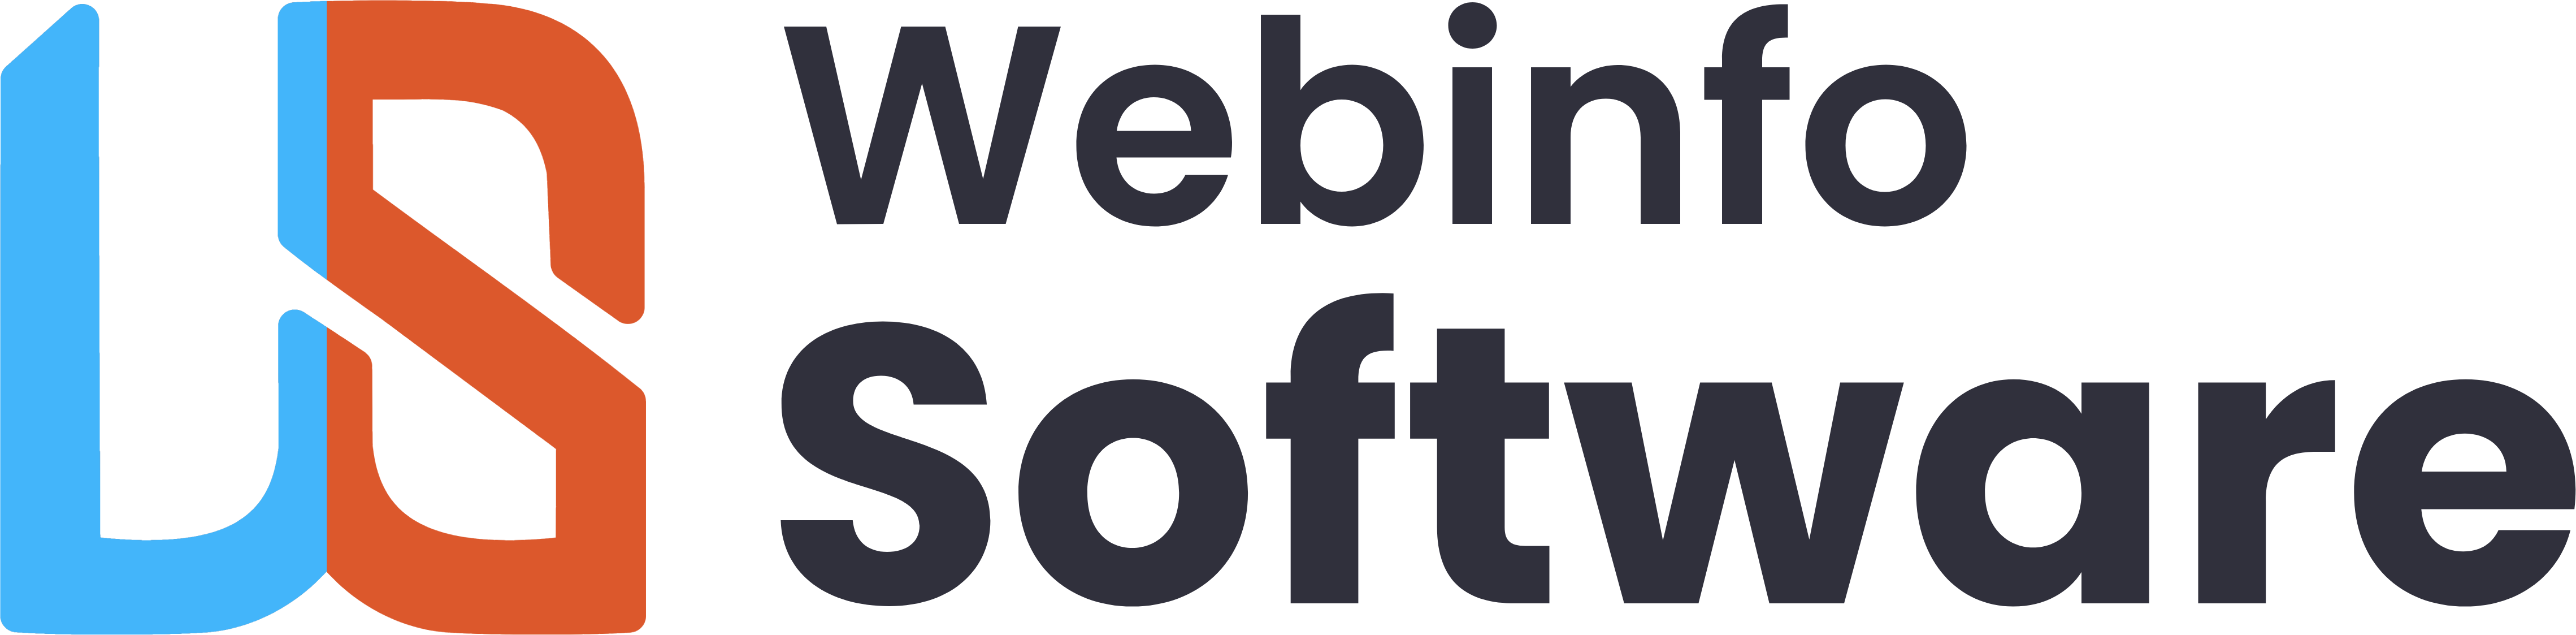 webinfosoftware branding logo